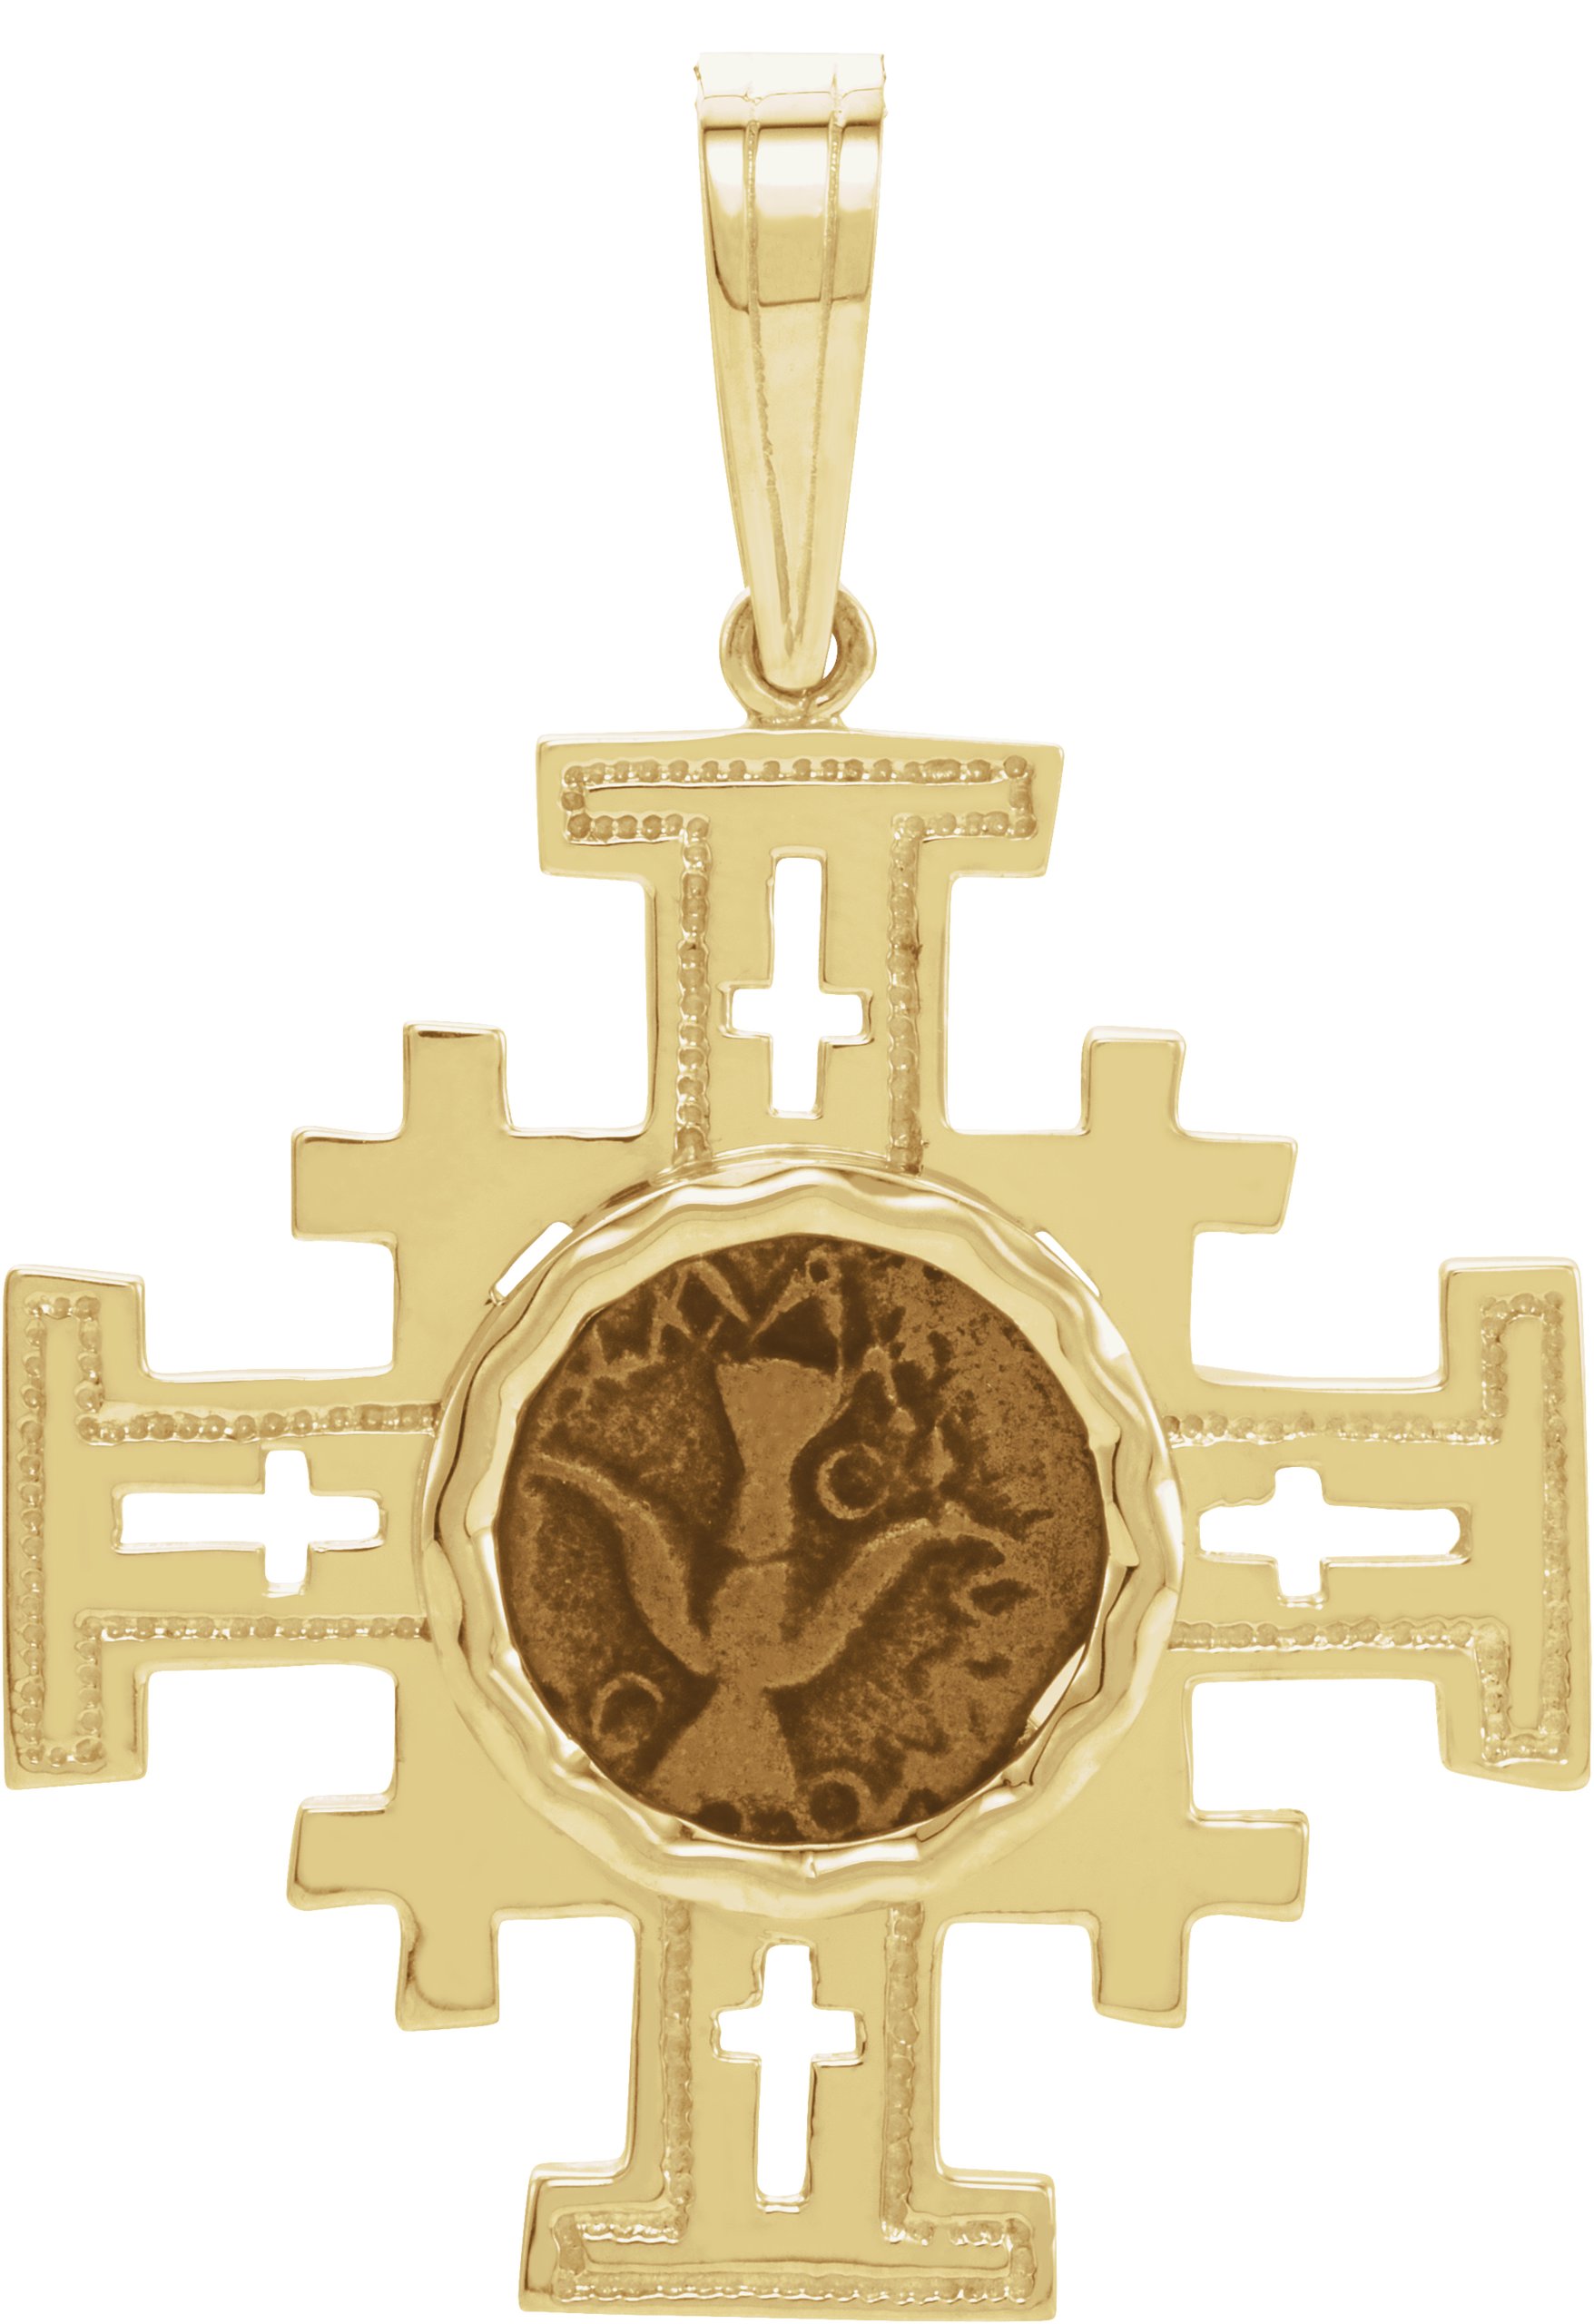 Jerusalem Cross Pendant with Widows Mite Coin 31.25 x 31.75mm Ref 825359